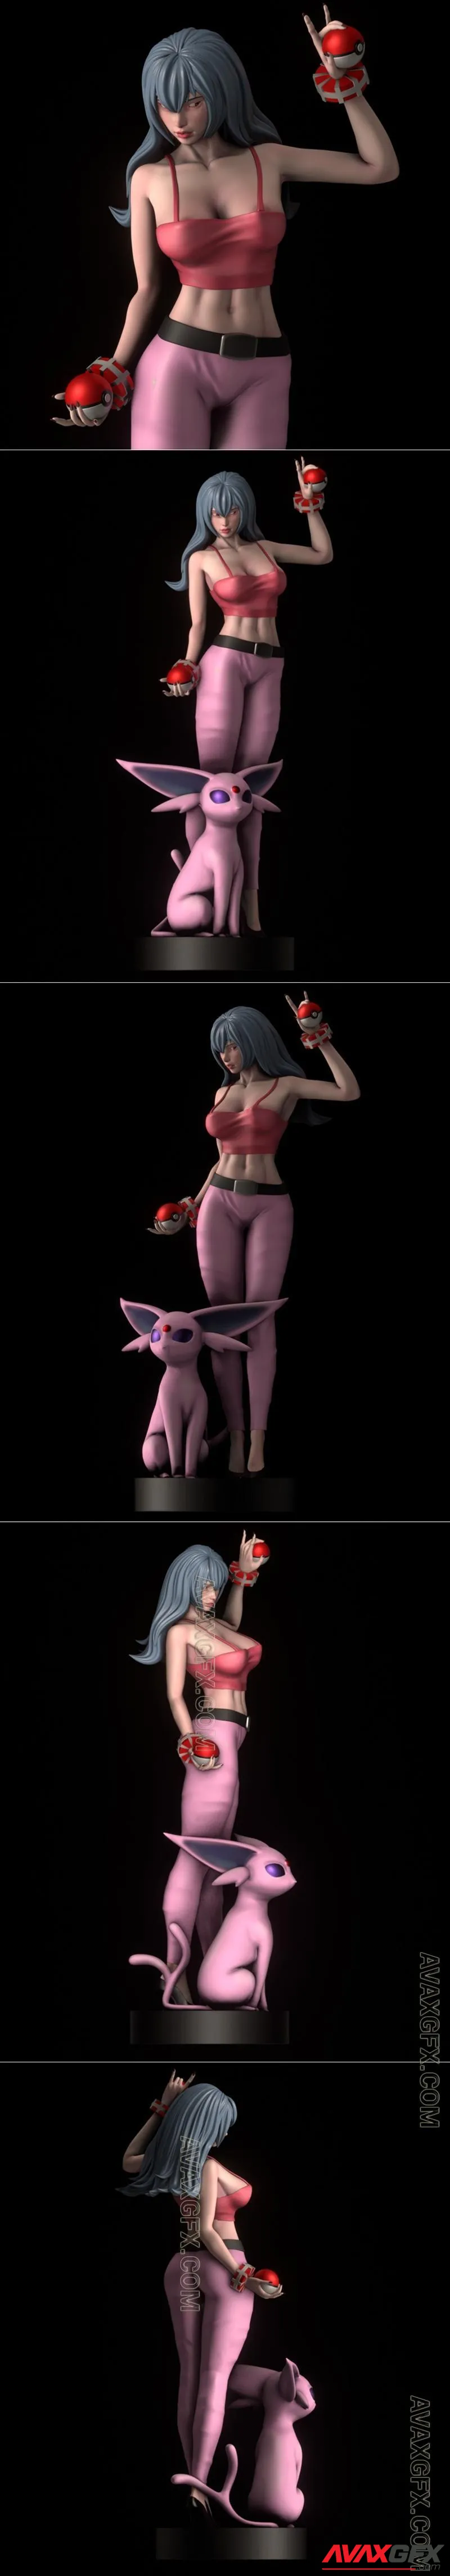 PgGasta - Sabrina Pokemon - STL 3D Model